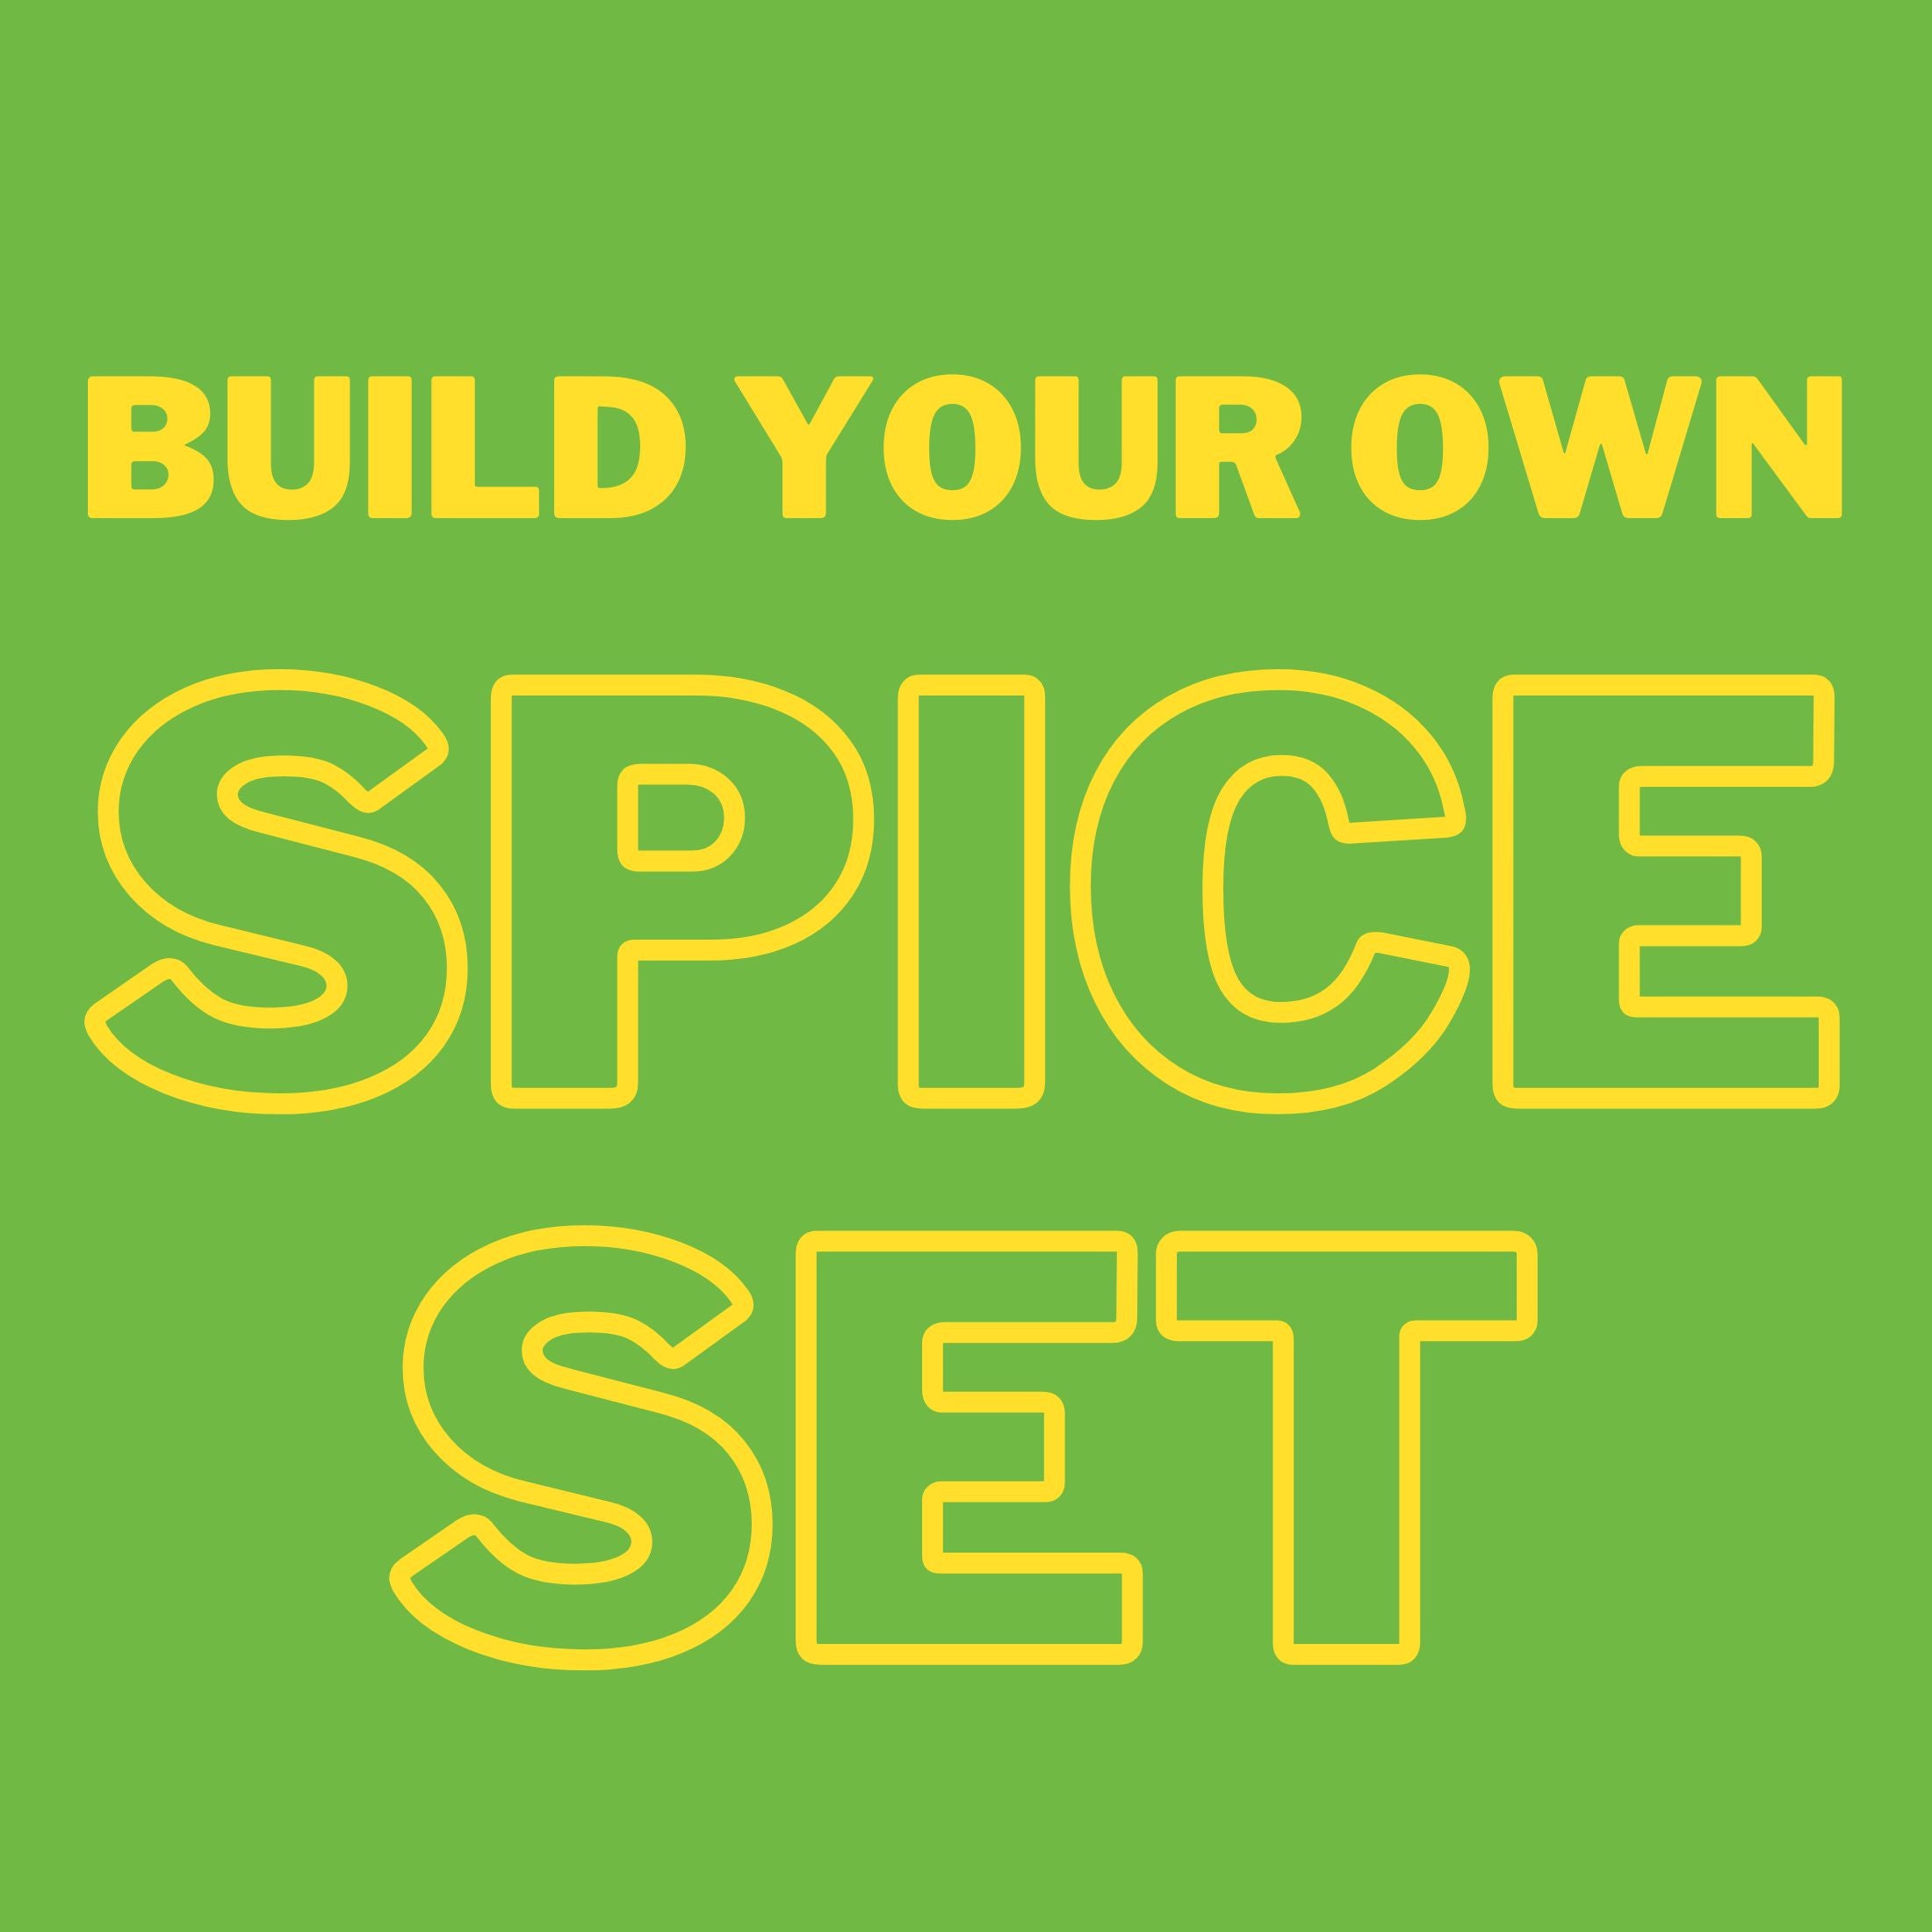 Build Your Own Spice Set with Sampler Bottles